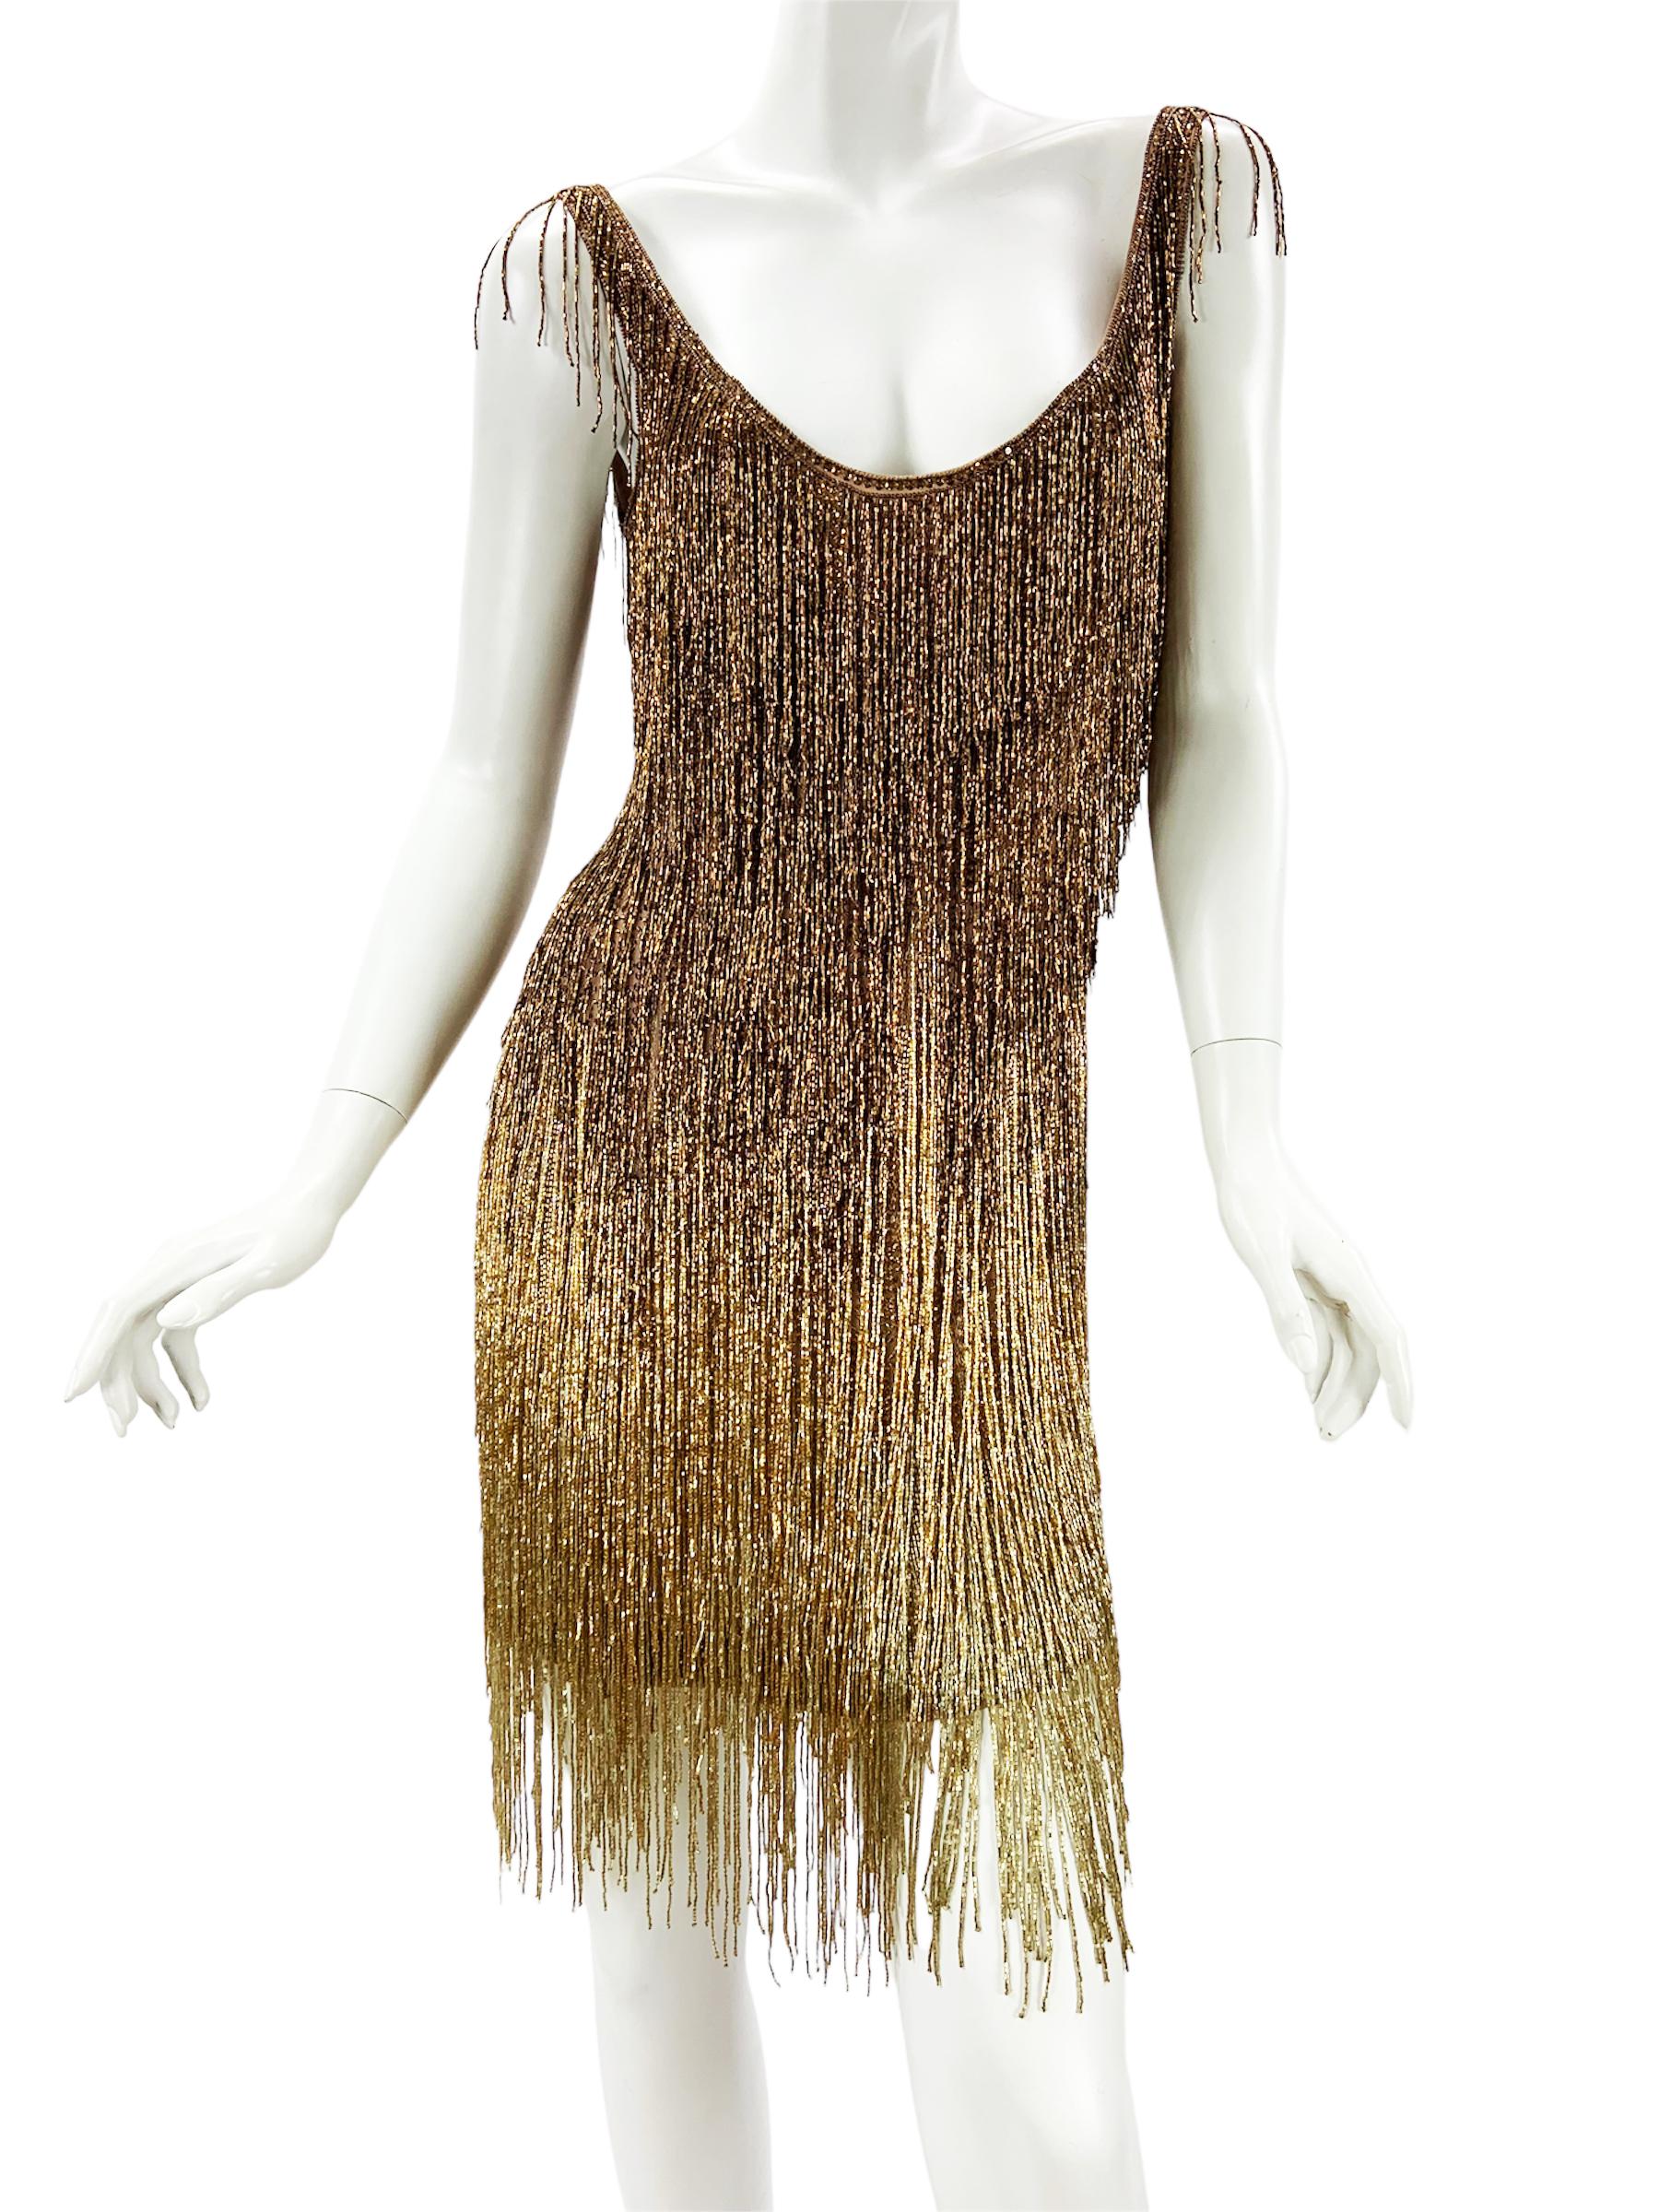 Iconic MUSEUM Roberto Cavalli Fringe Beaded Dress as seen on TAYLOR SWIFT It. 40 1